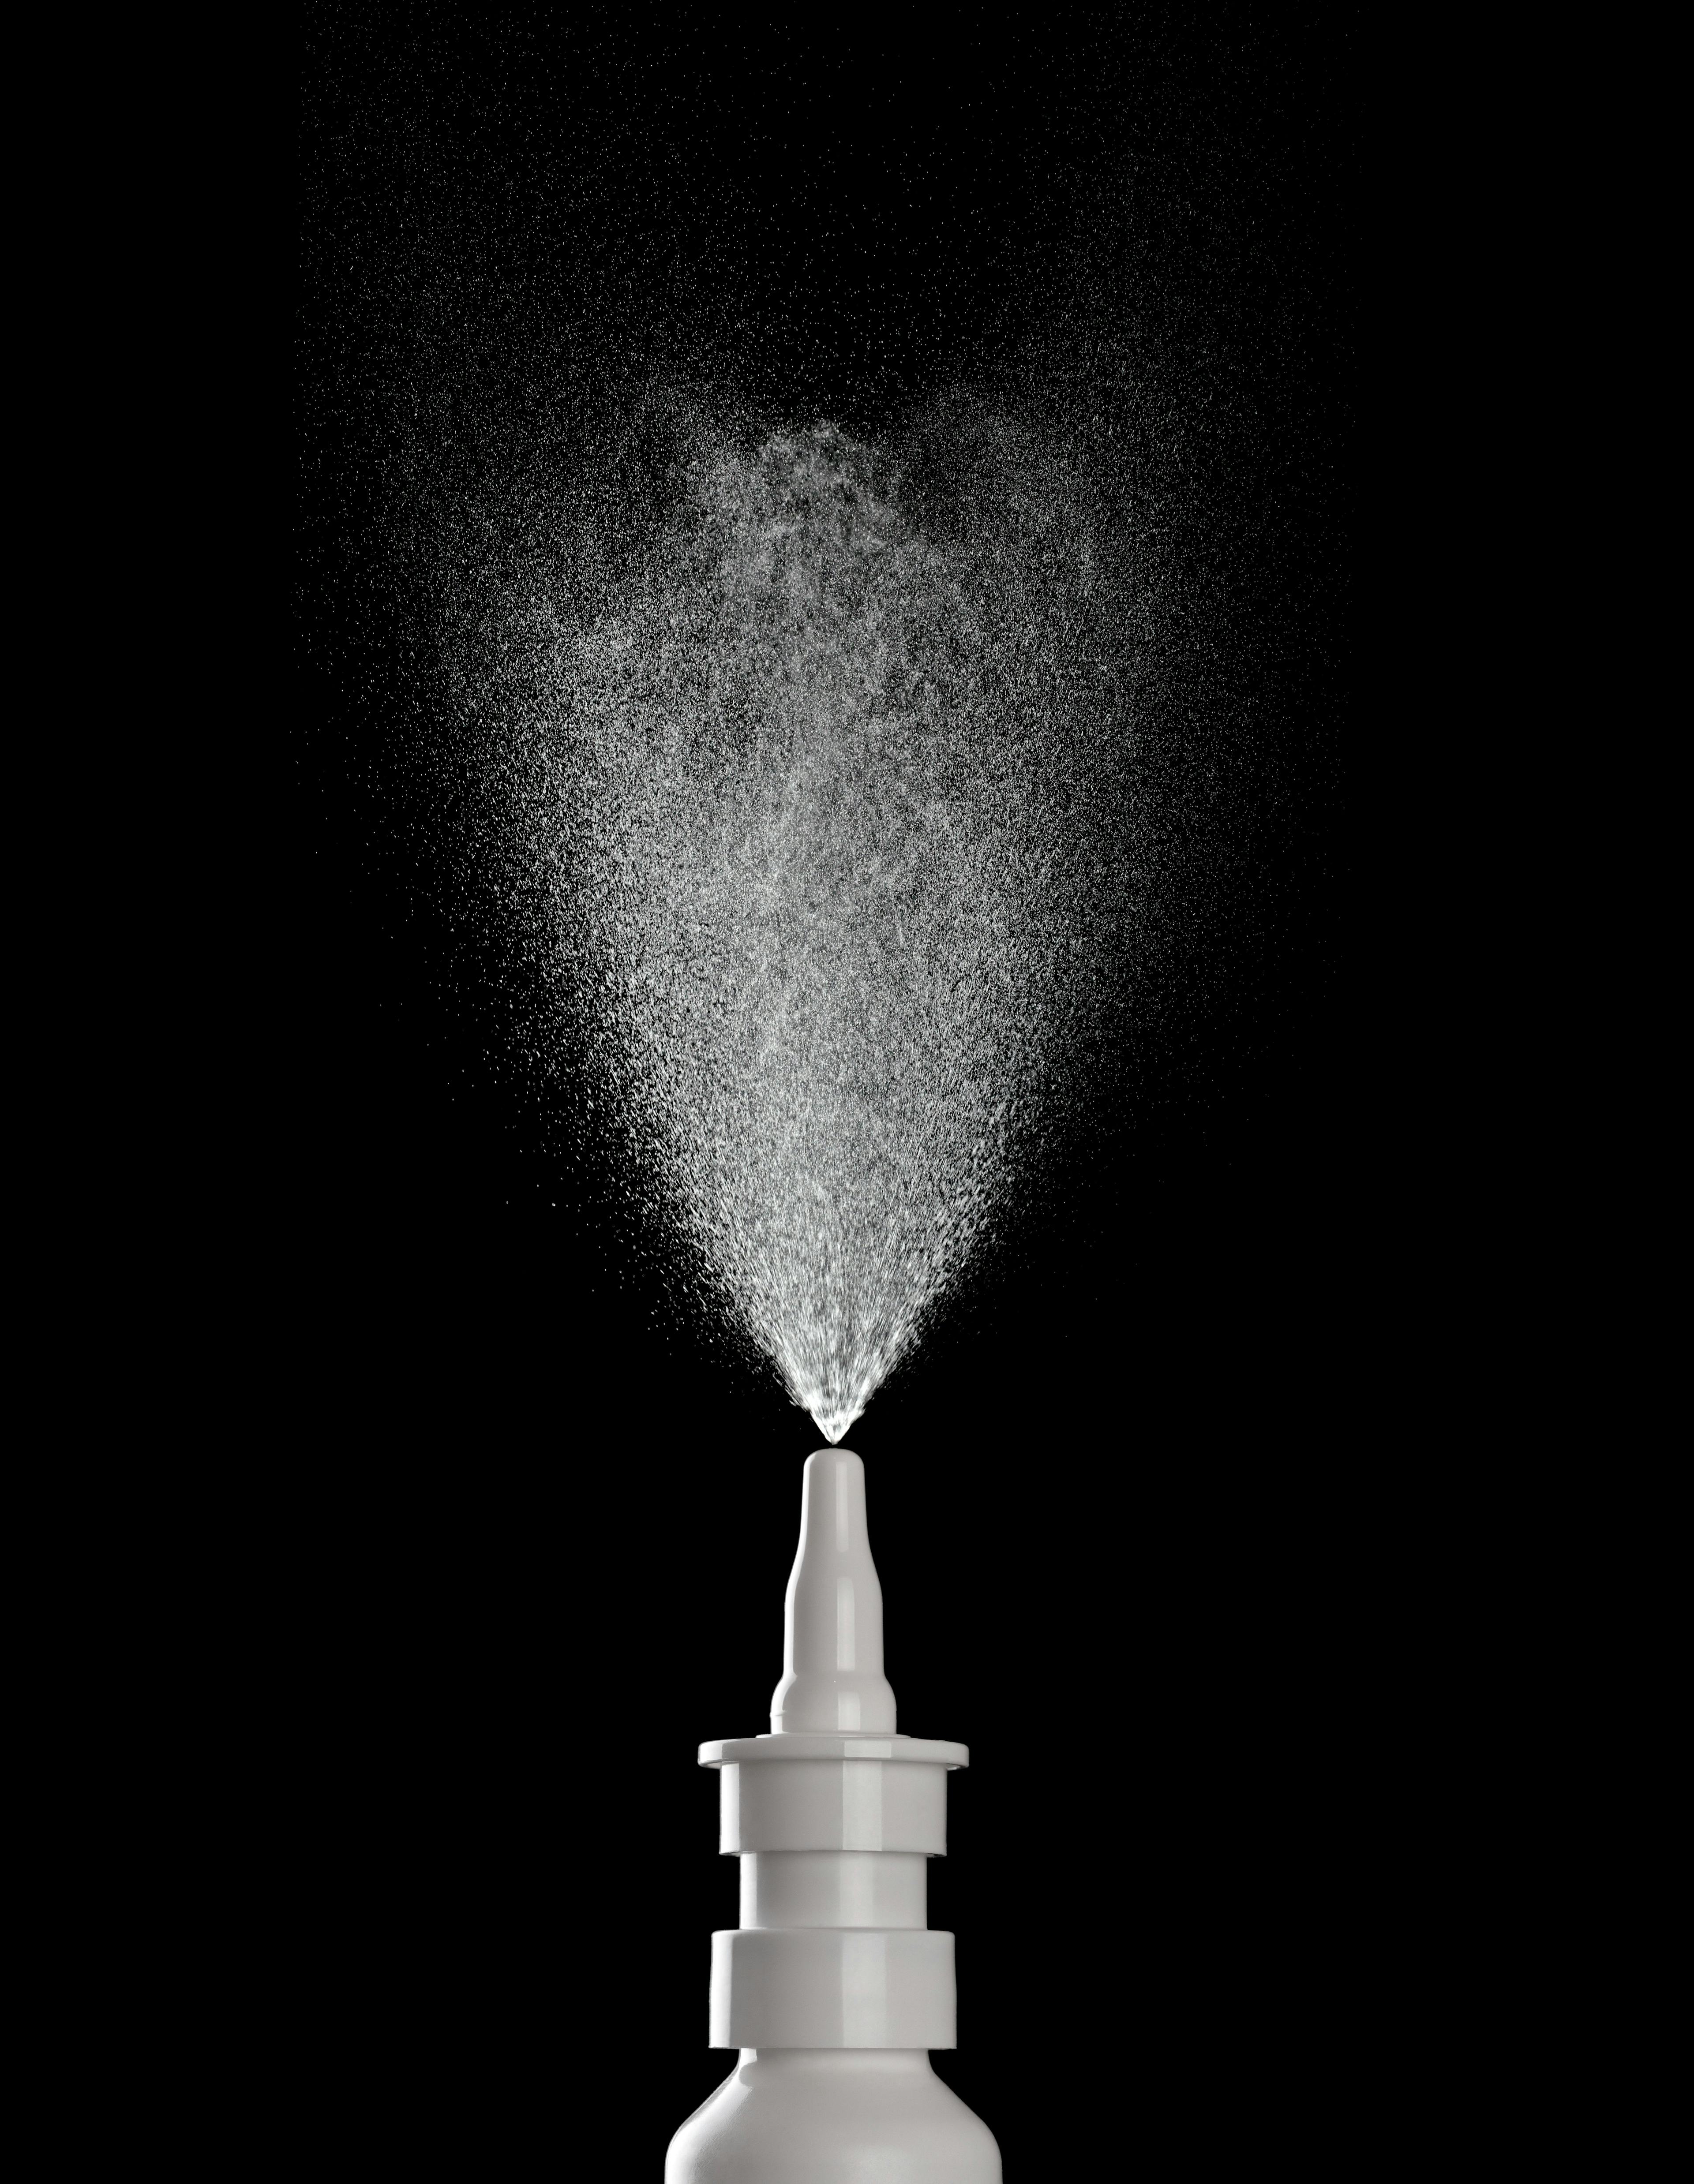 Determination of Elemental Impurities in a Nasal Spray by ICP-MS